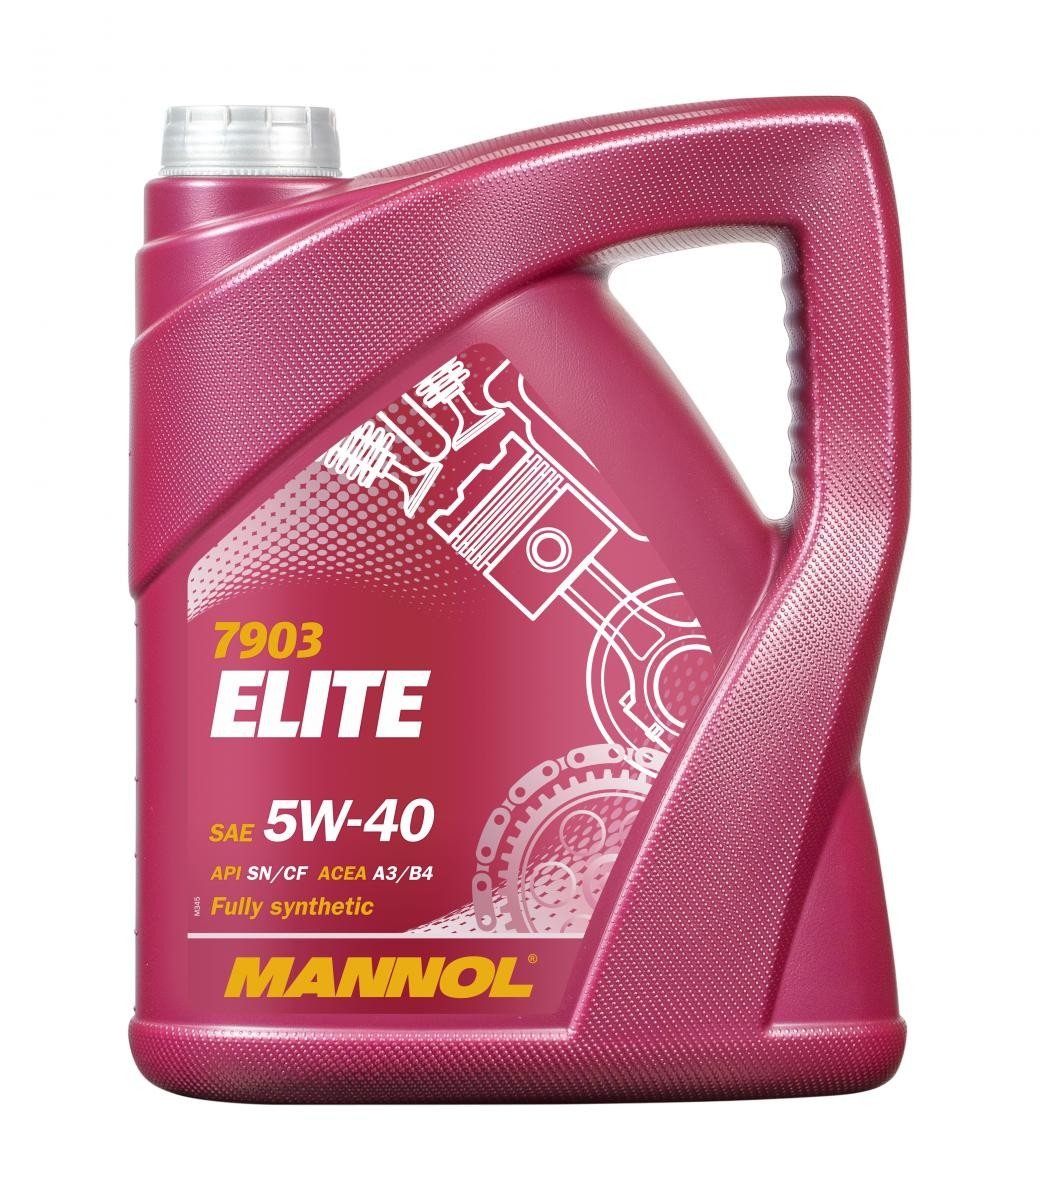 Mannol Elite 7903 5W-40 5L